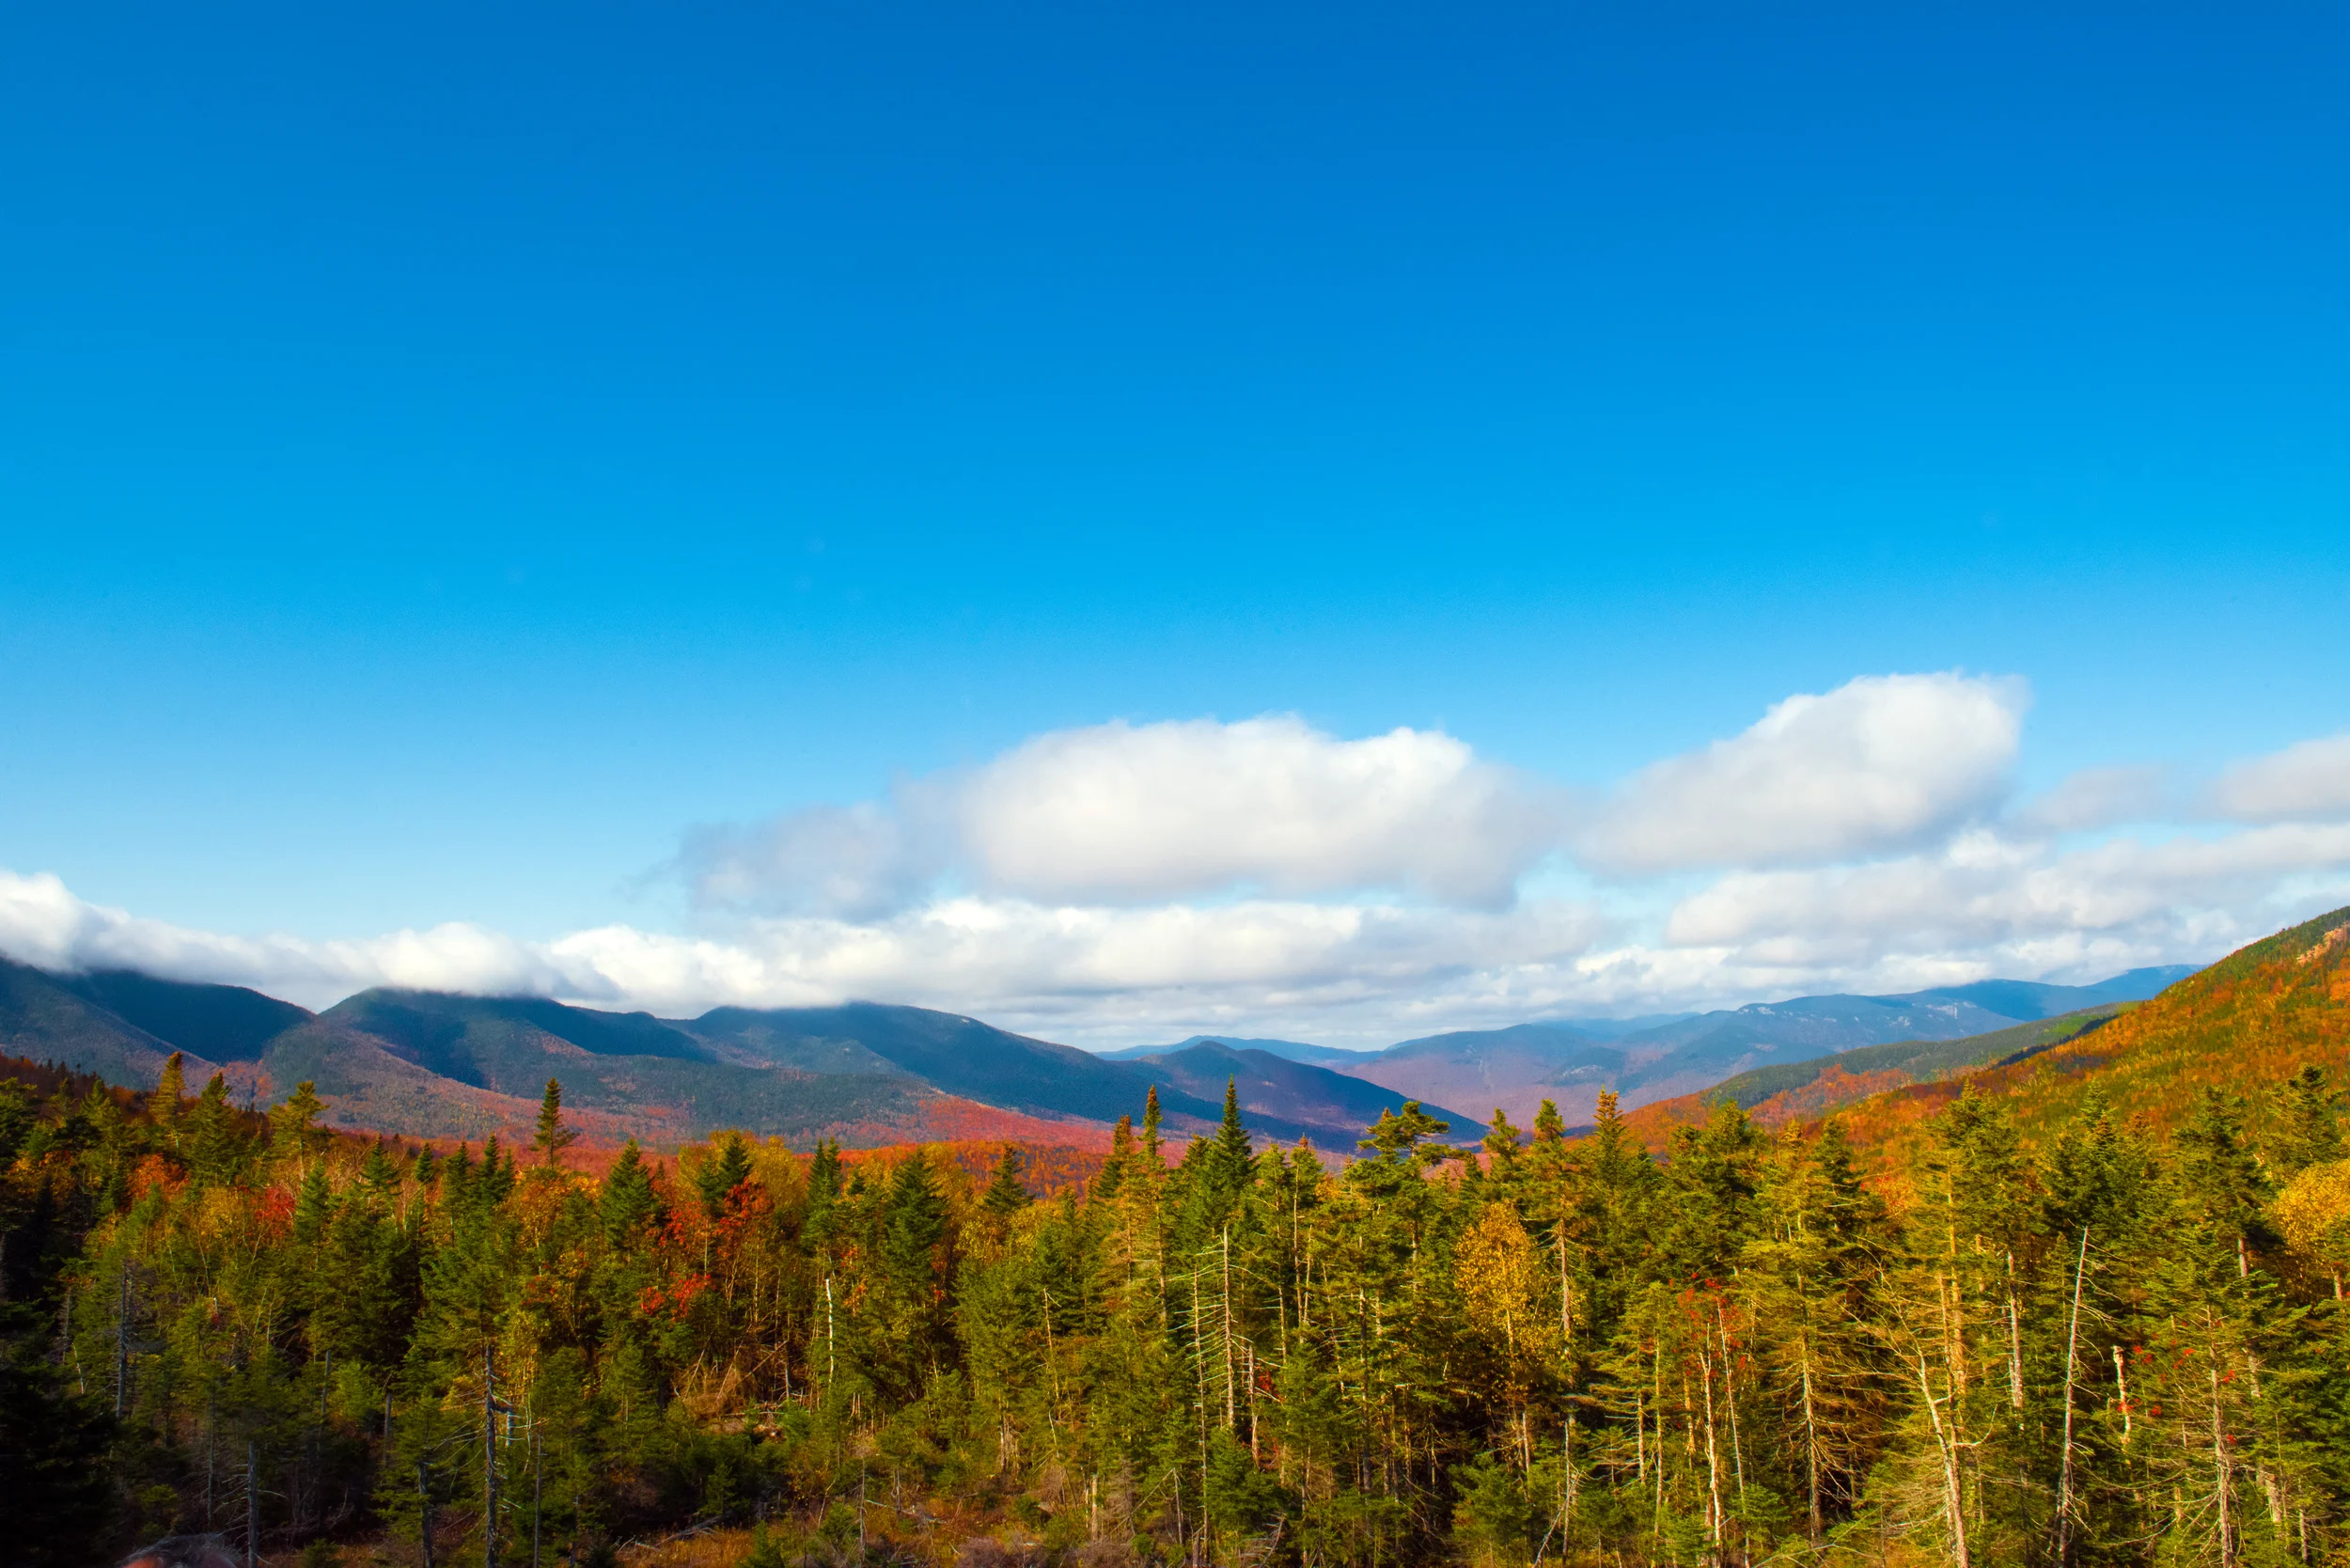 Enjoy Four Scenic Drives Through New Hampshire